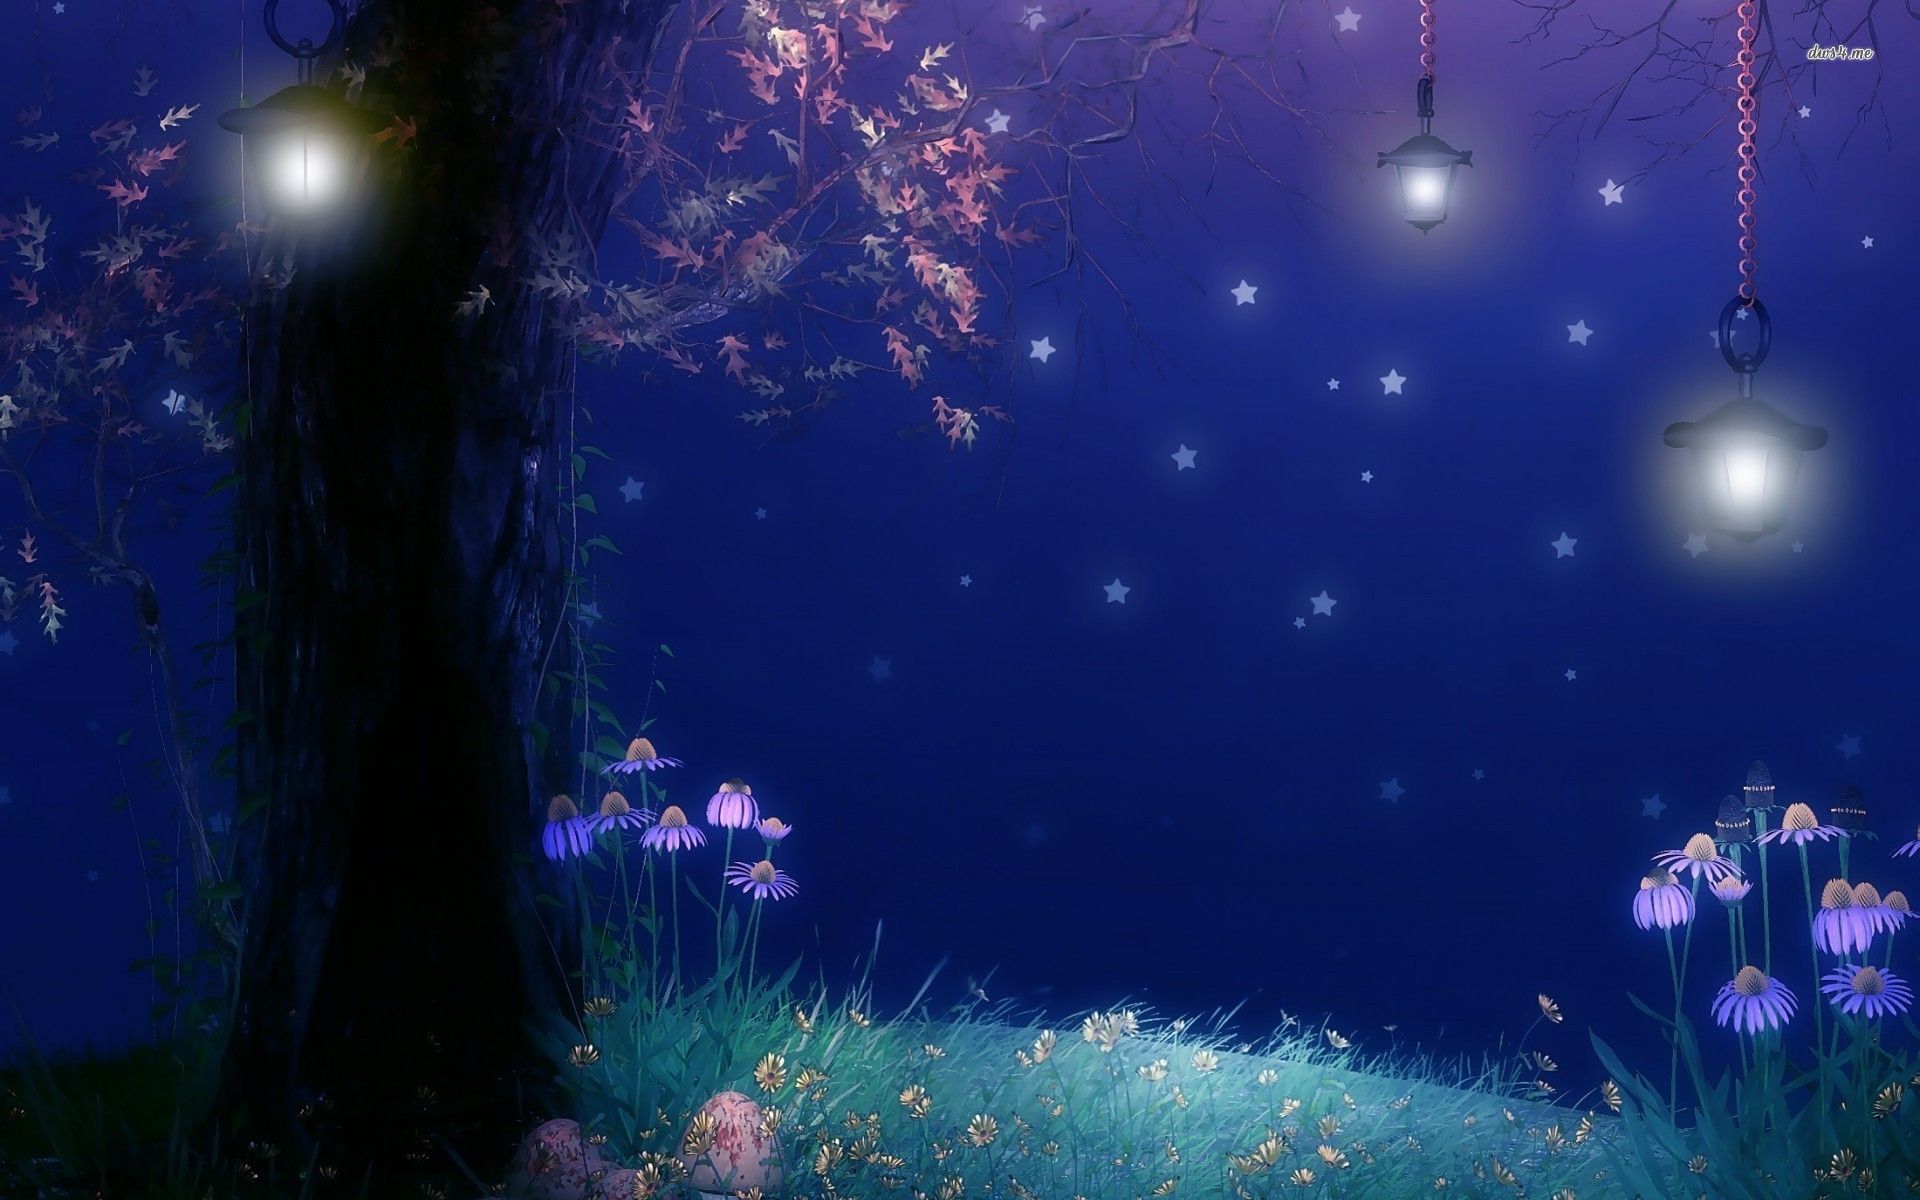 Anime Scenery At Night wallpaper | Anime scenery, Anime scenery wallpaper,  Night scenery